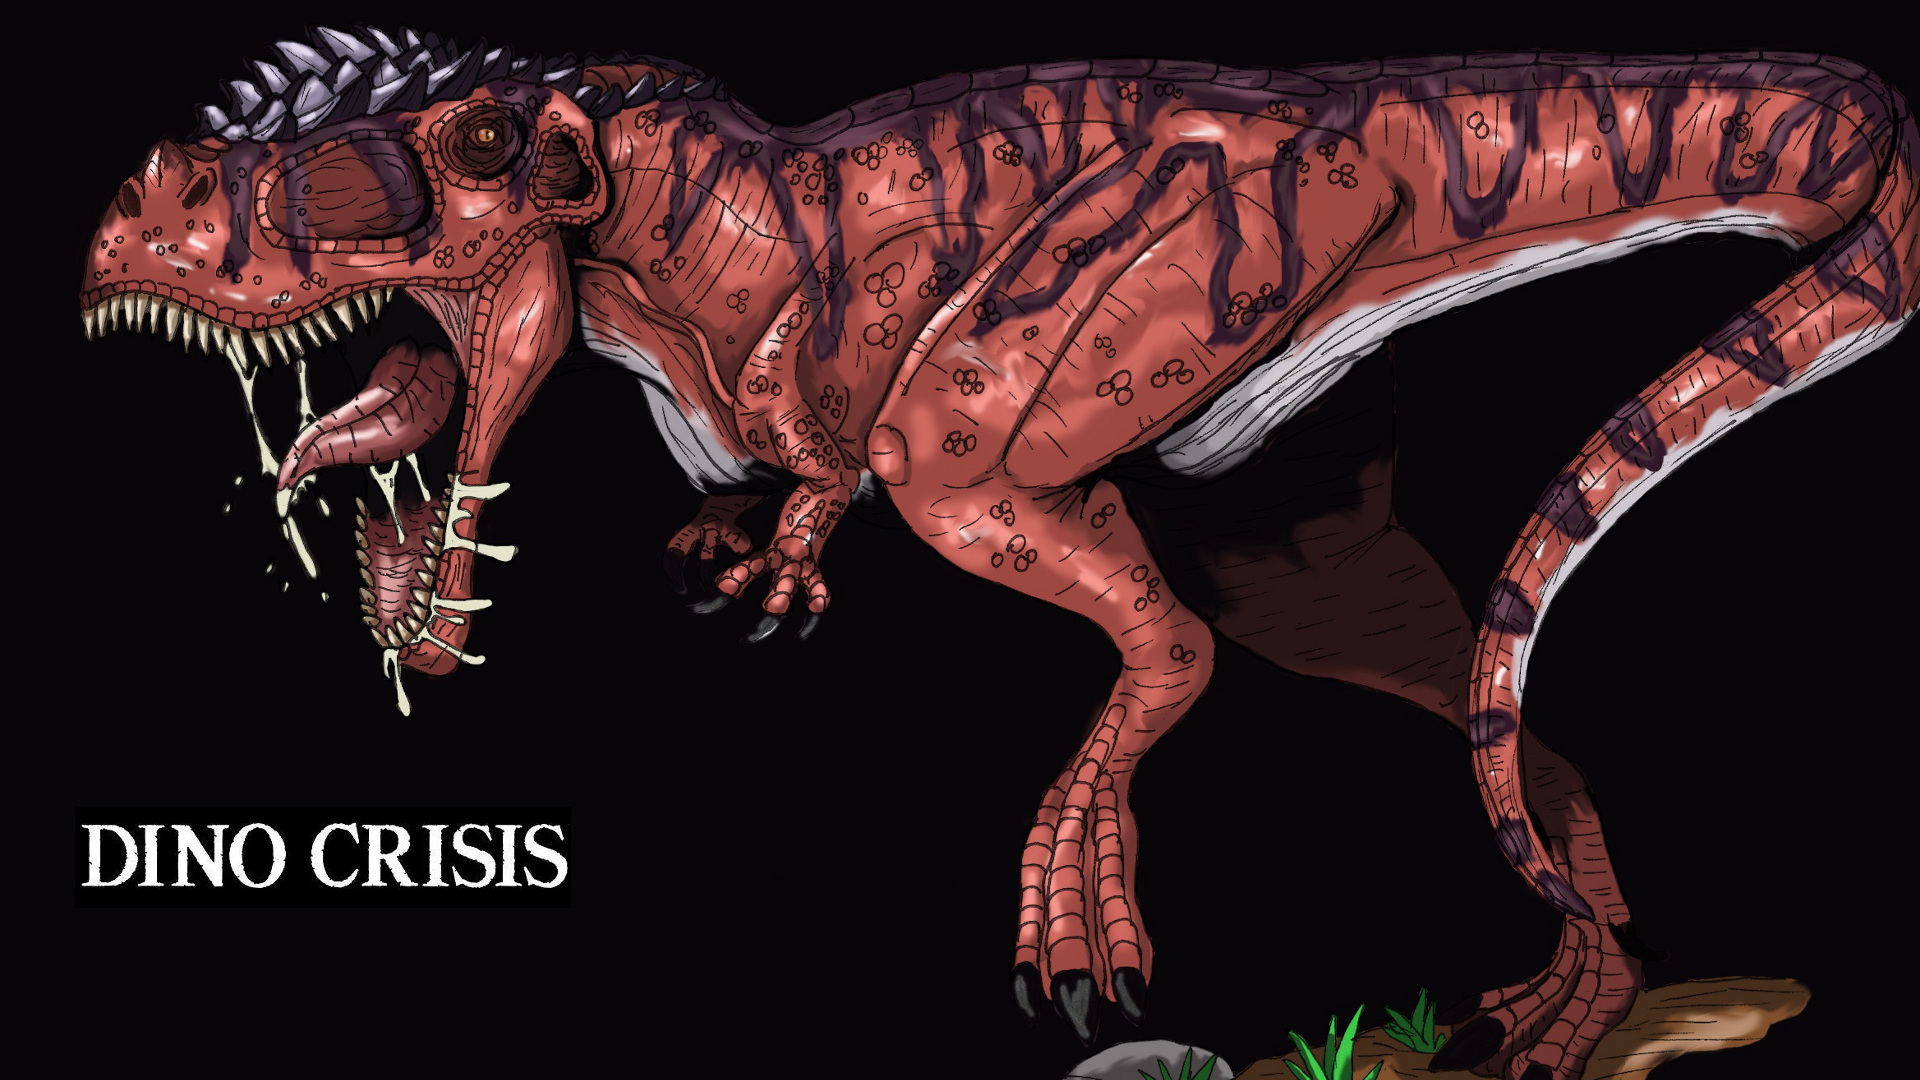 Dino Crisis 2 HD Wallpaper